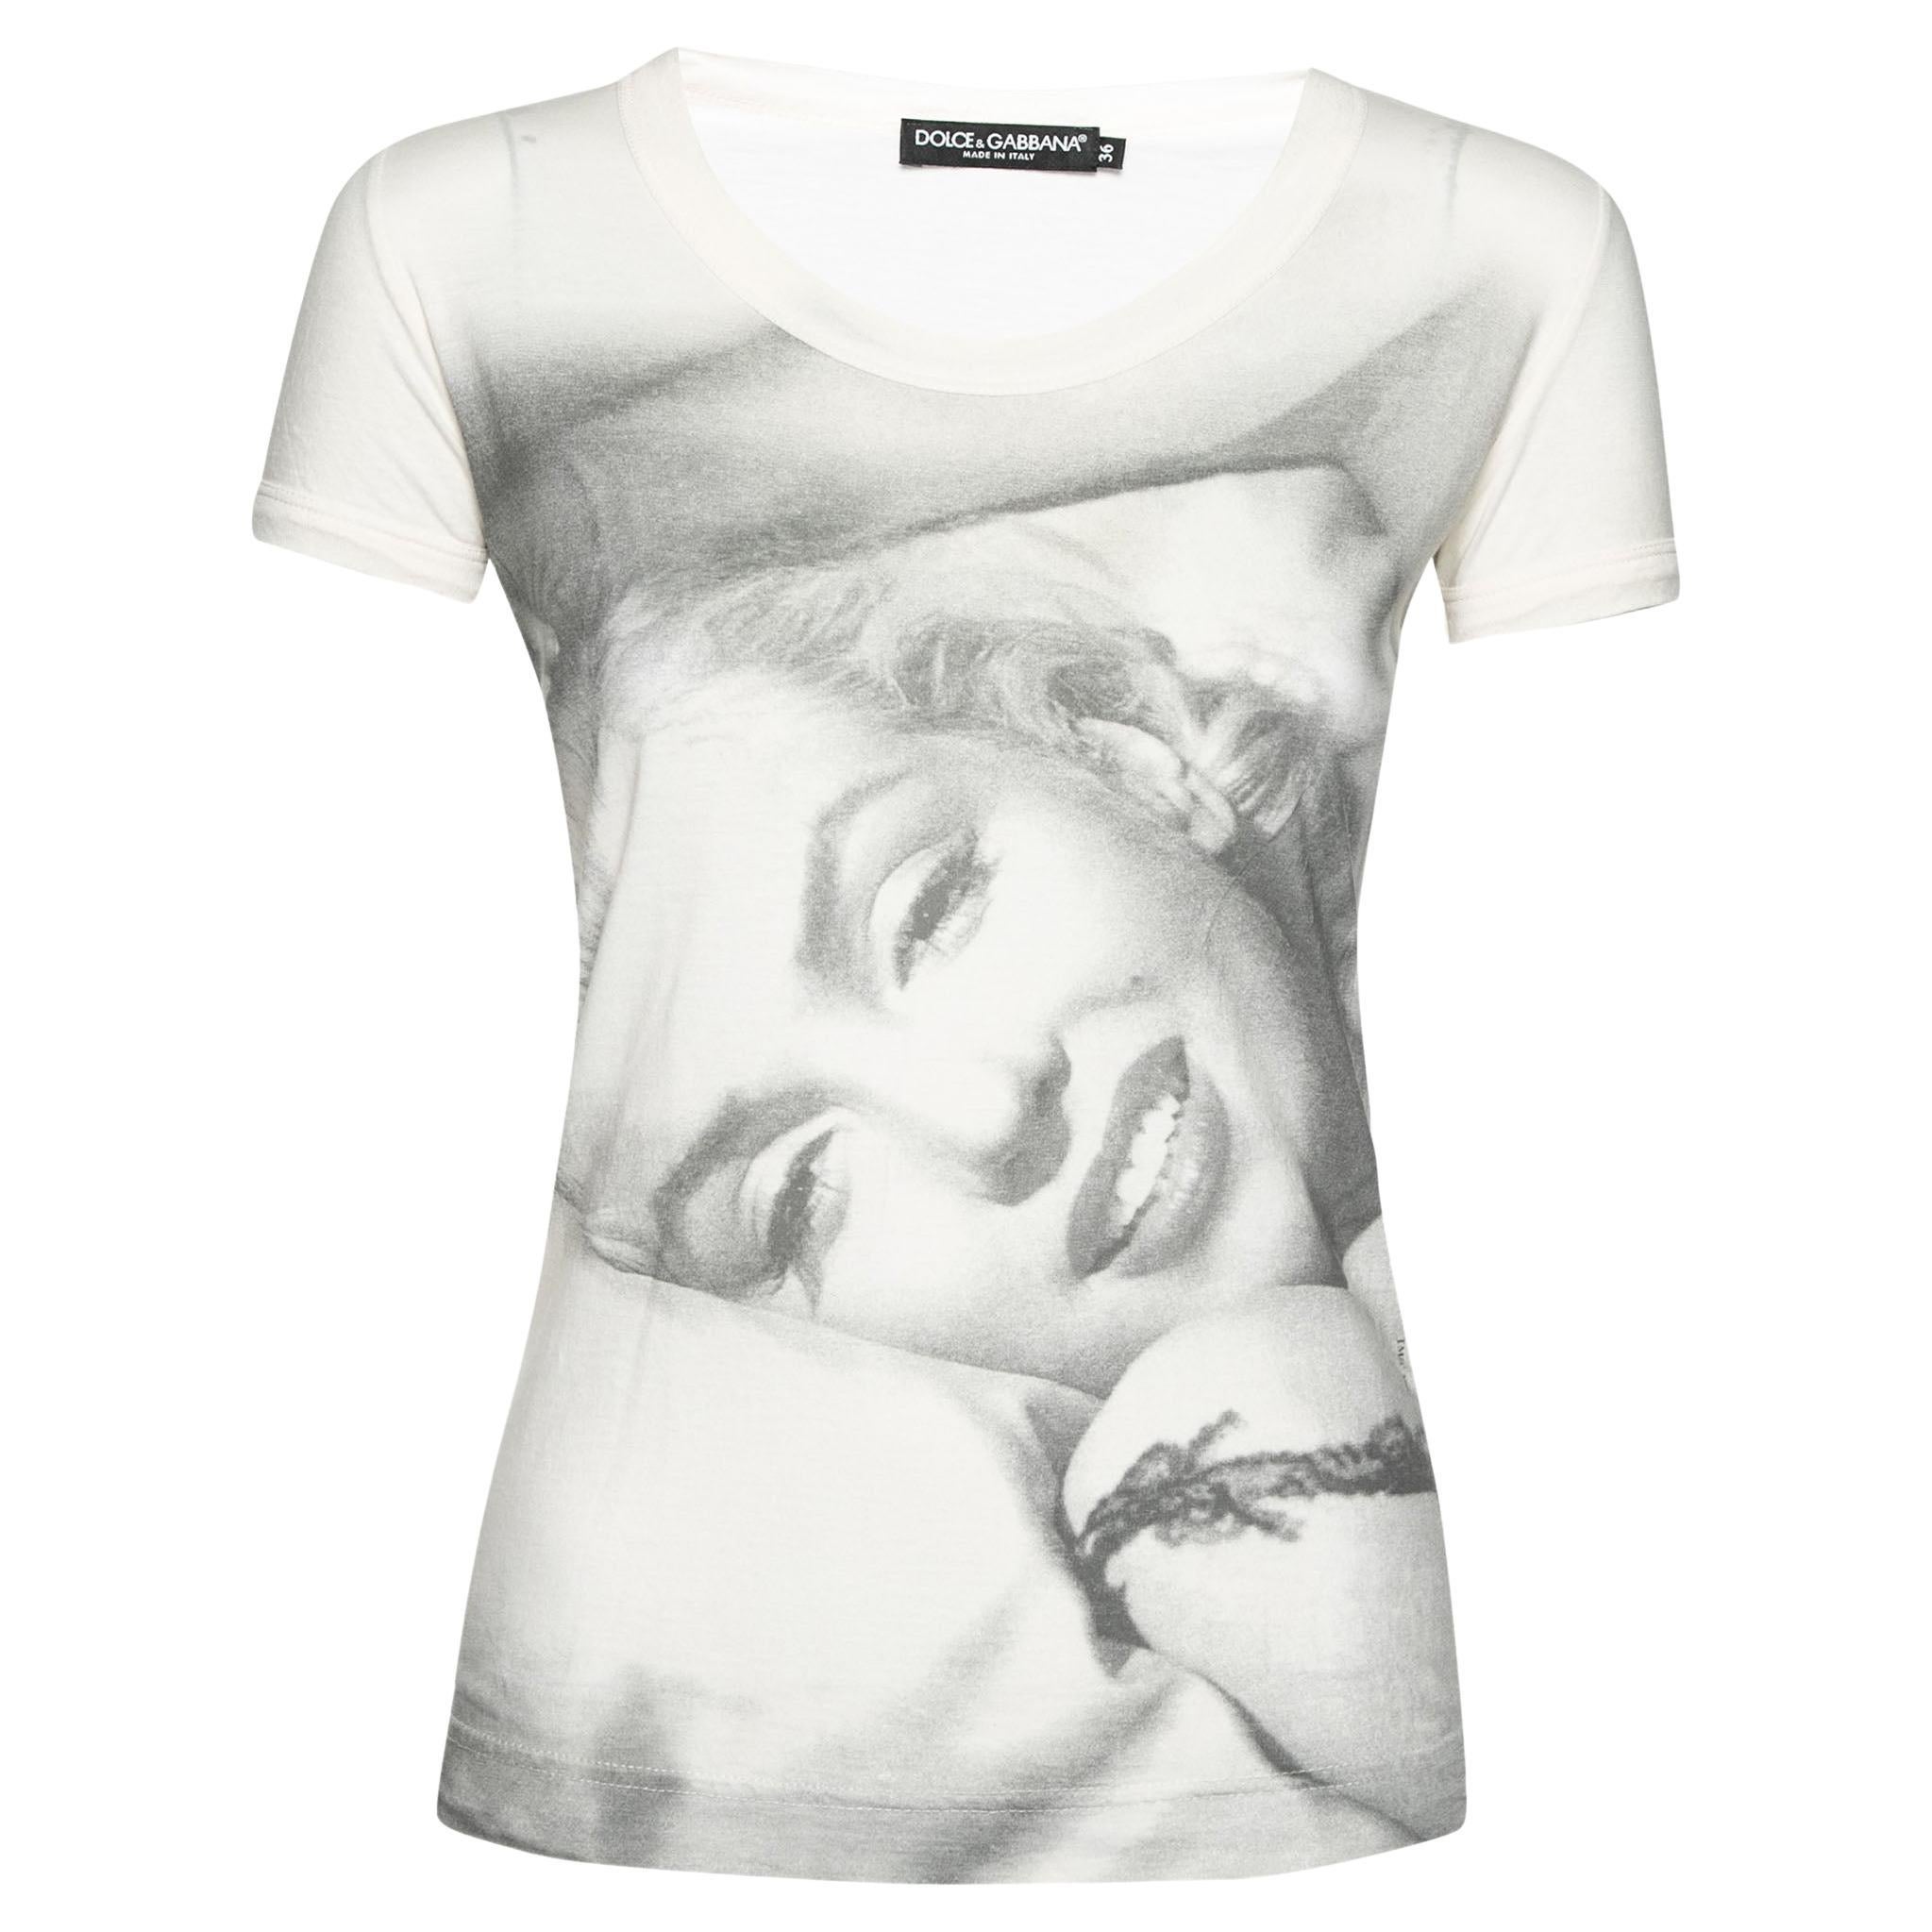 Dolce & Gabbana Cream Marilyn Monroe Printed Cotton T-Shirt XS For Sale